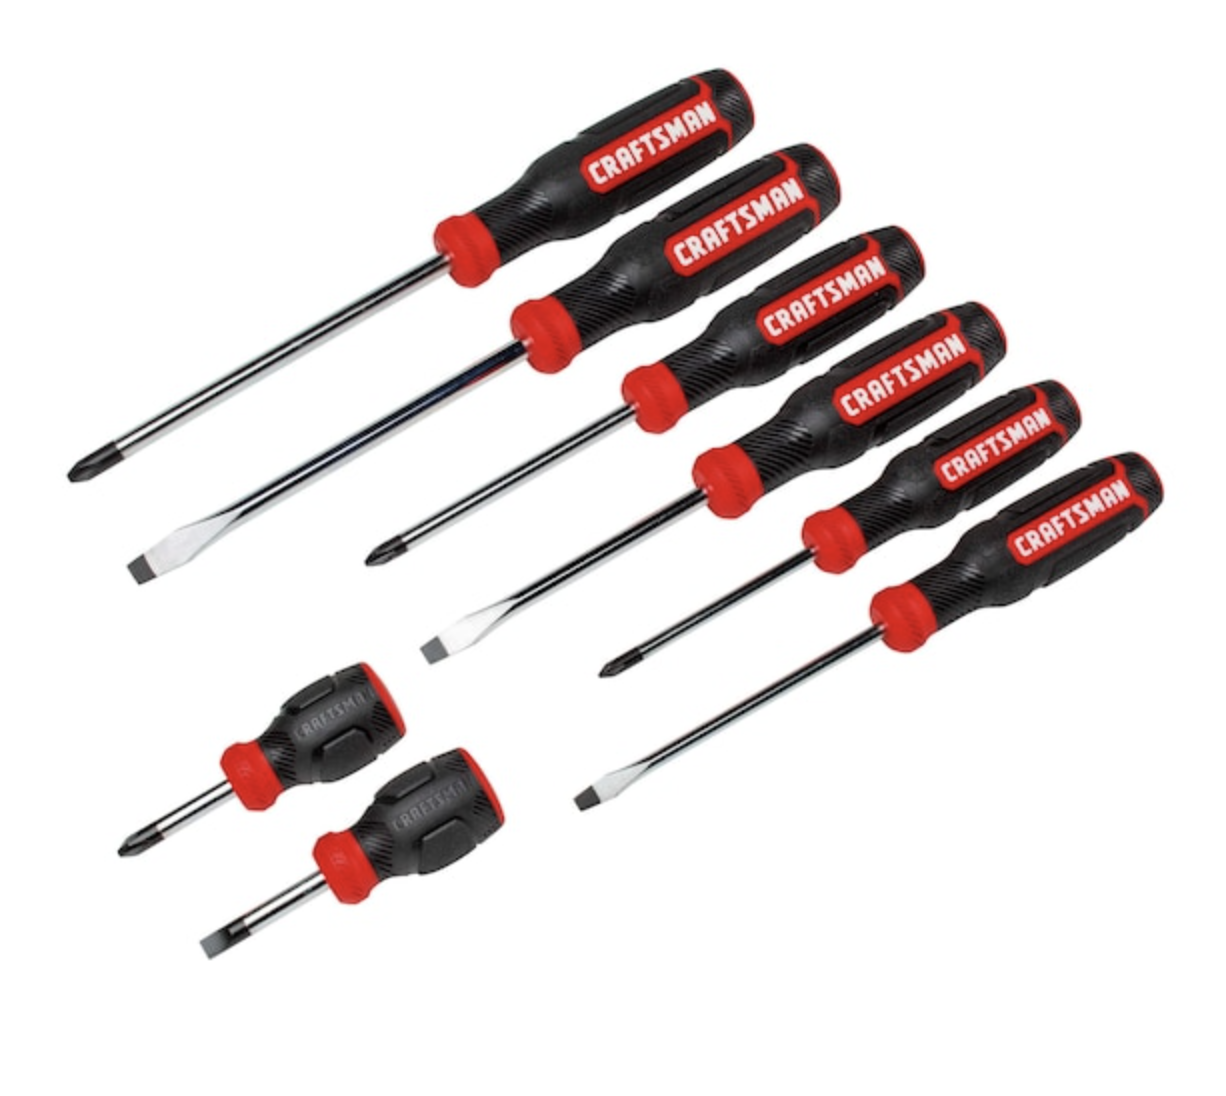 Set of eight Craftsmen screwdrivers